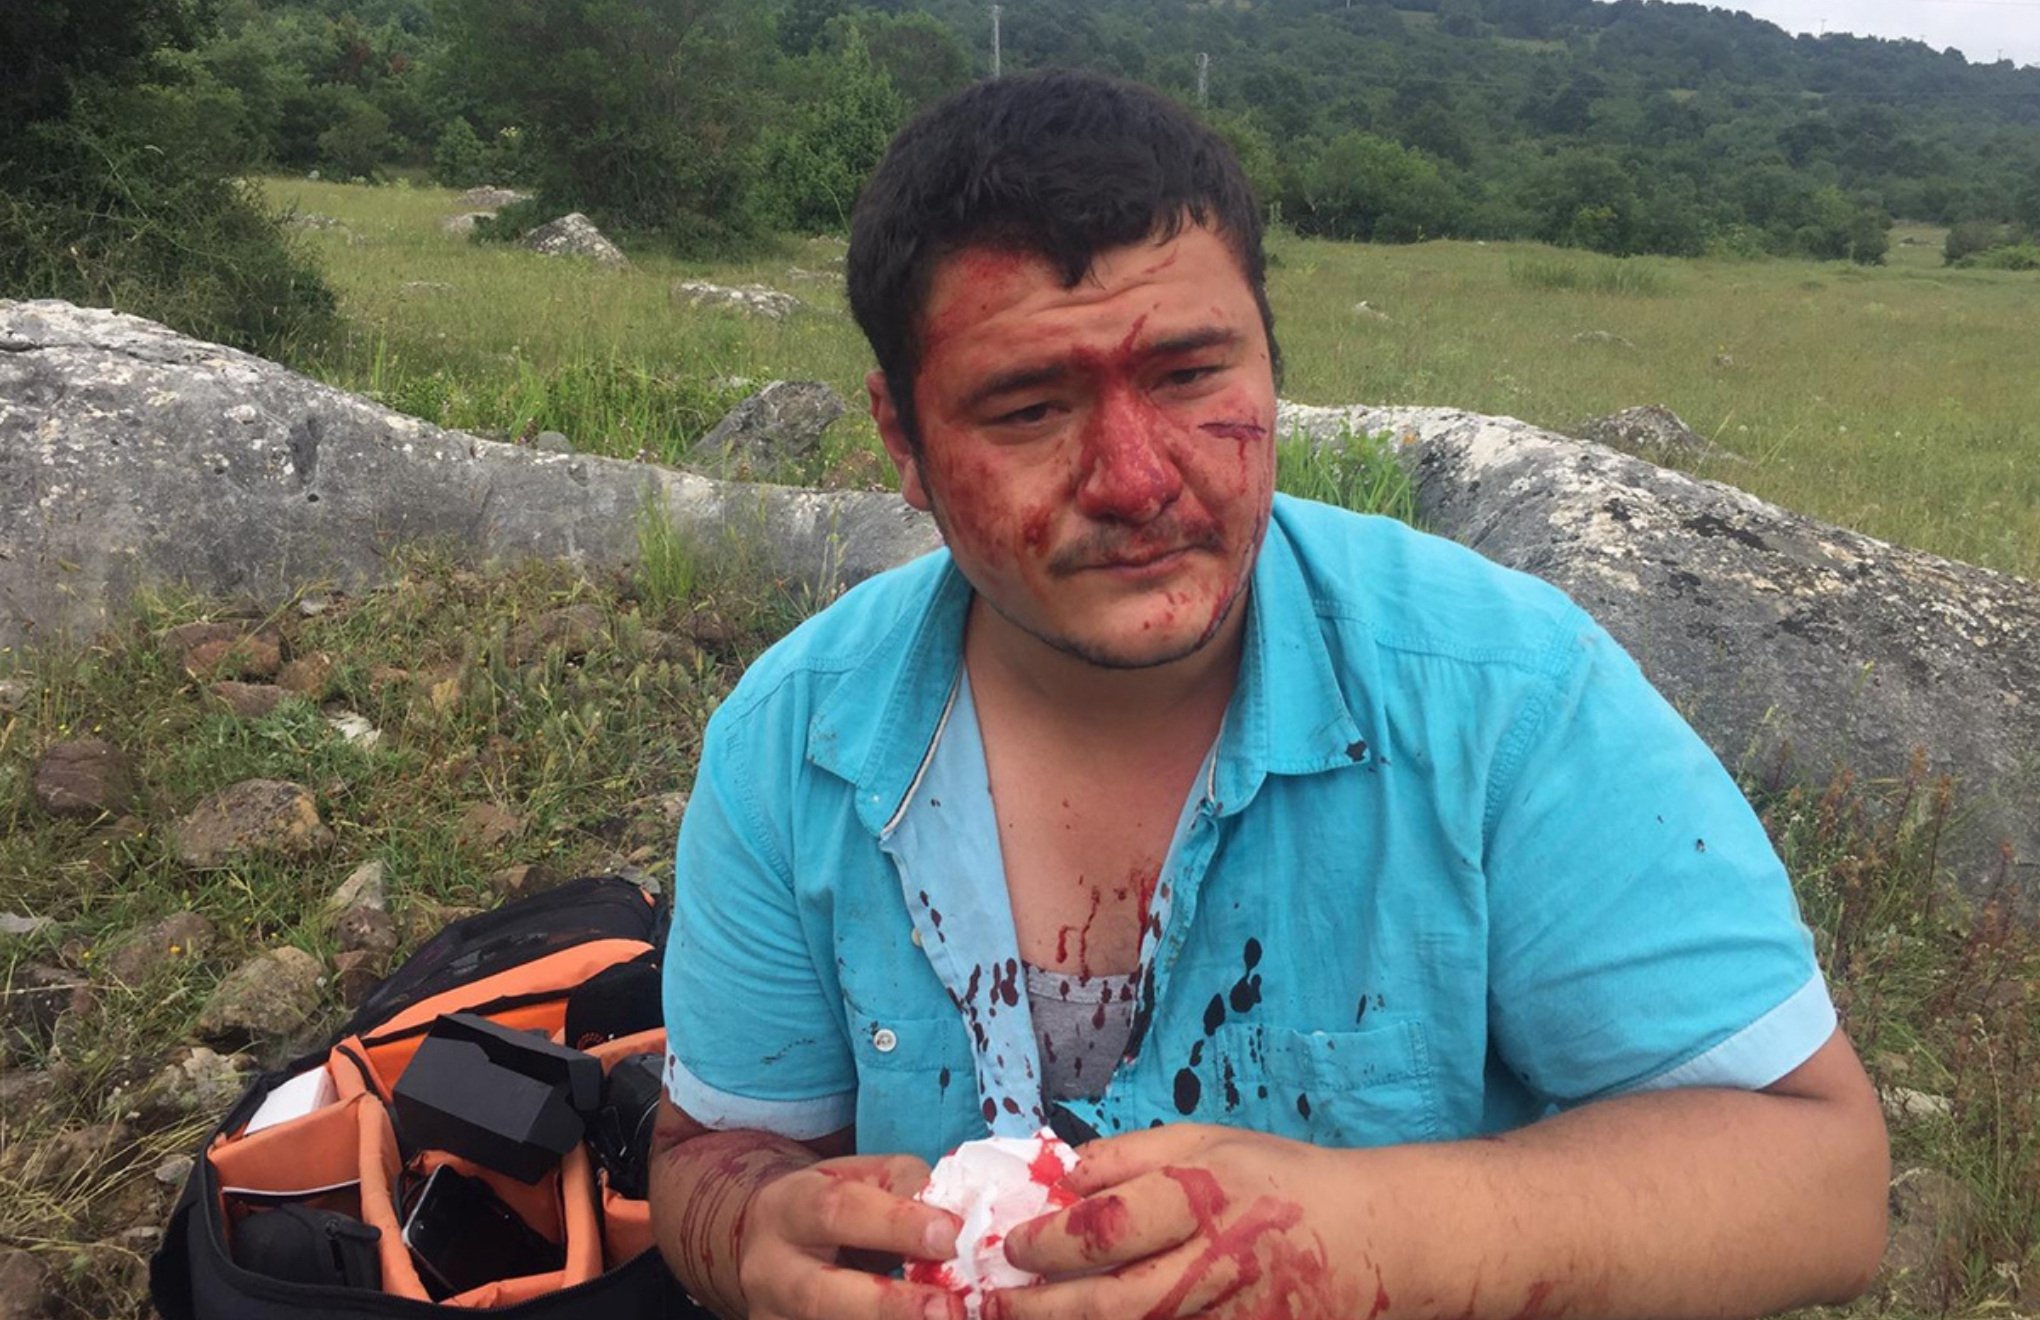 İHA reporter Mustafa Uslu attacked in Kocaeli